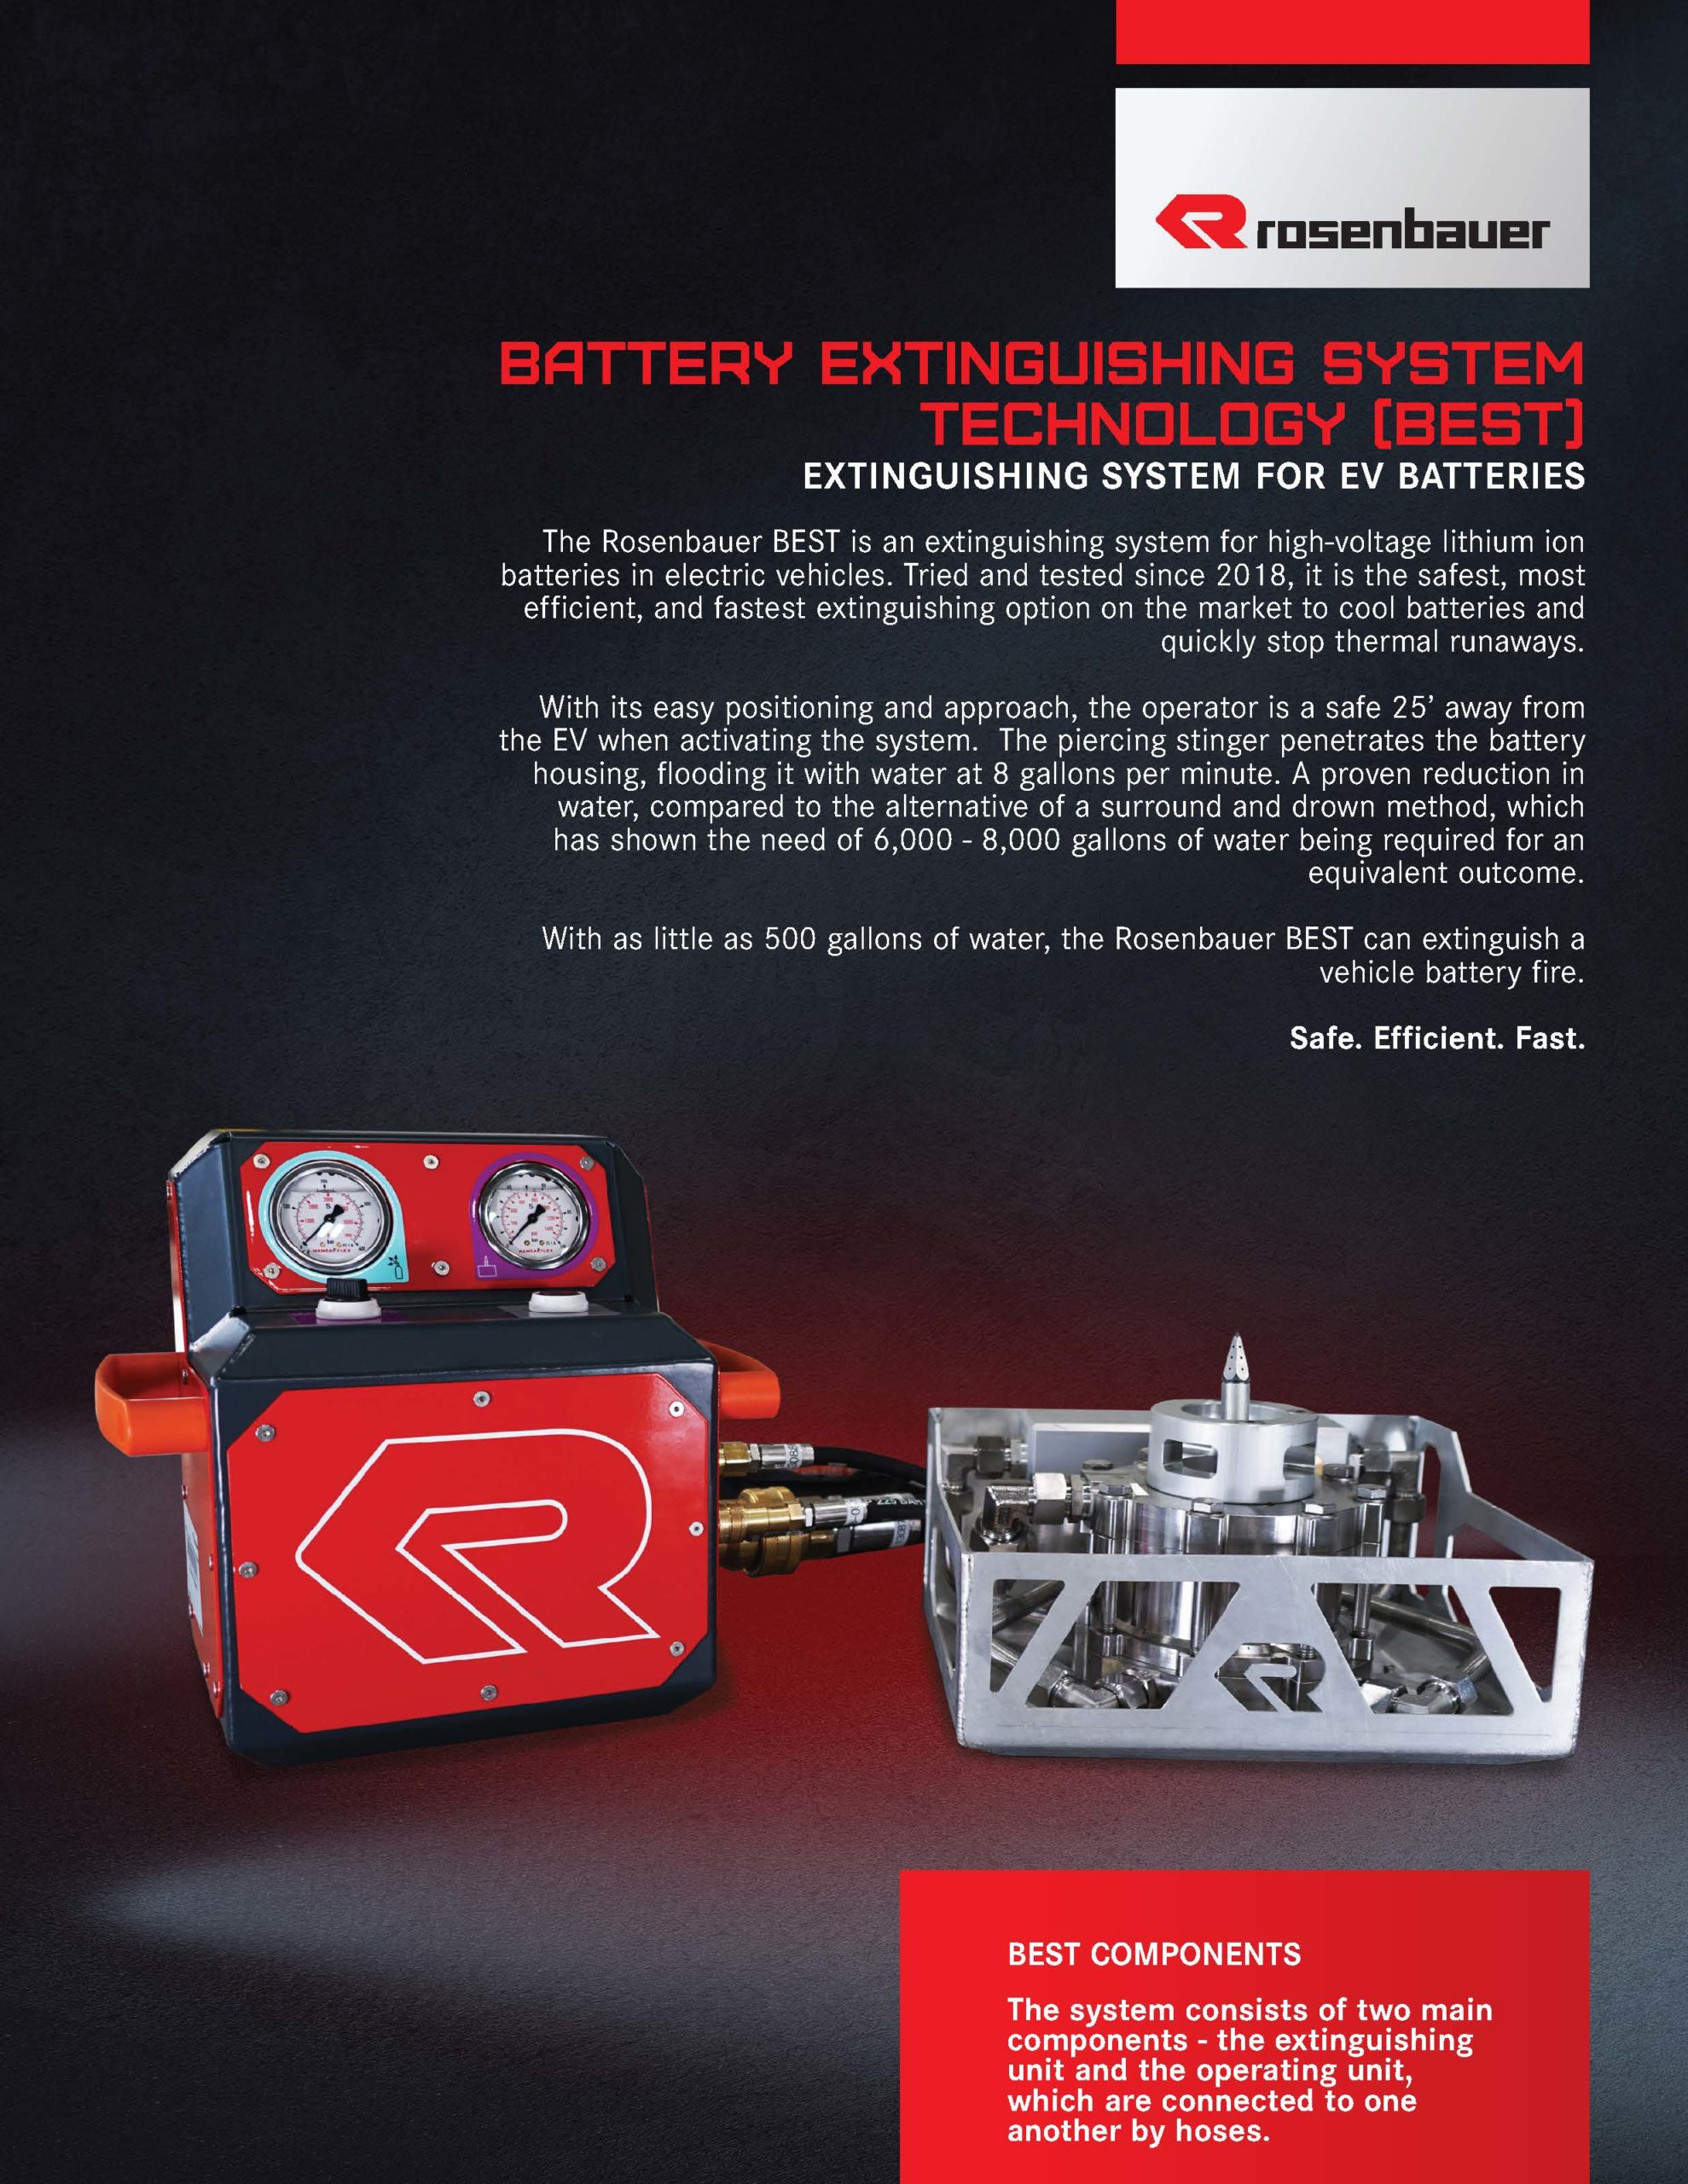 BEST (Battery Extinguishing System Technology)